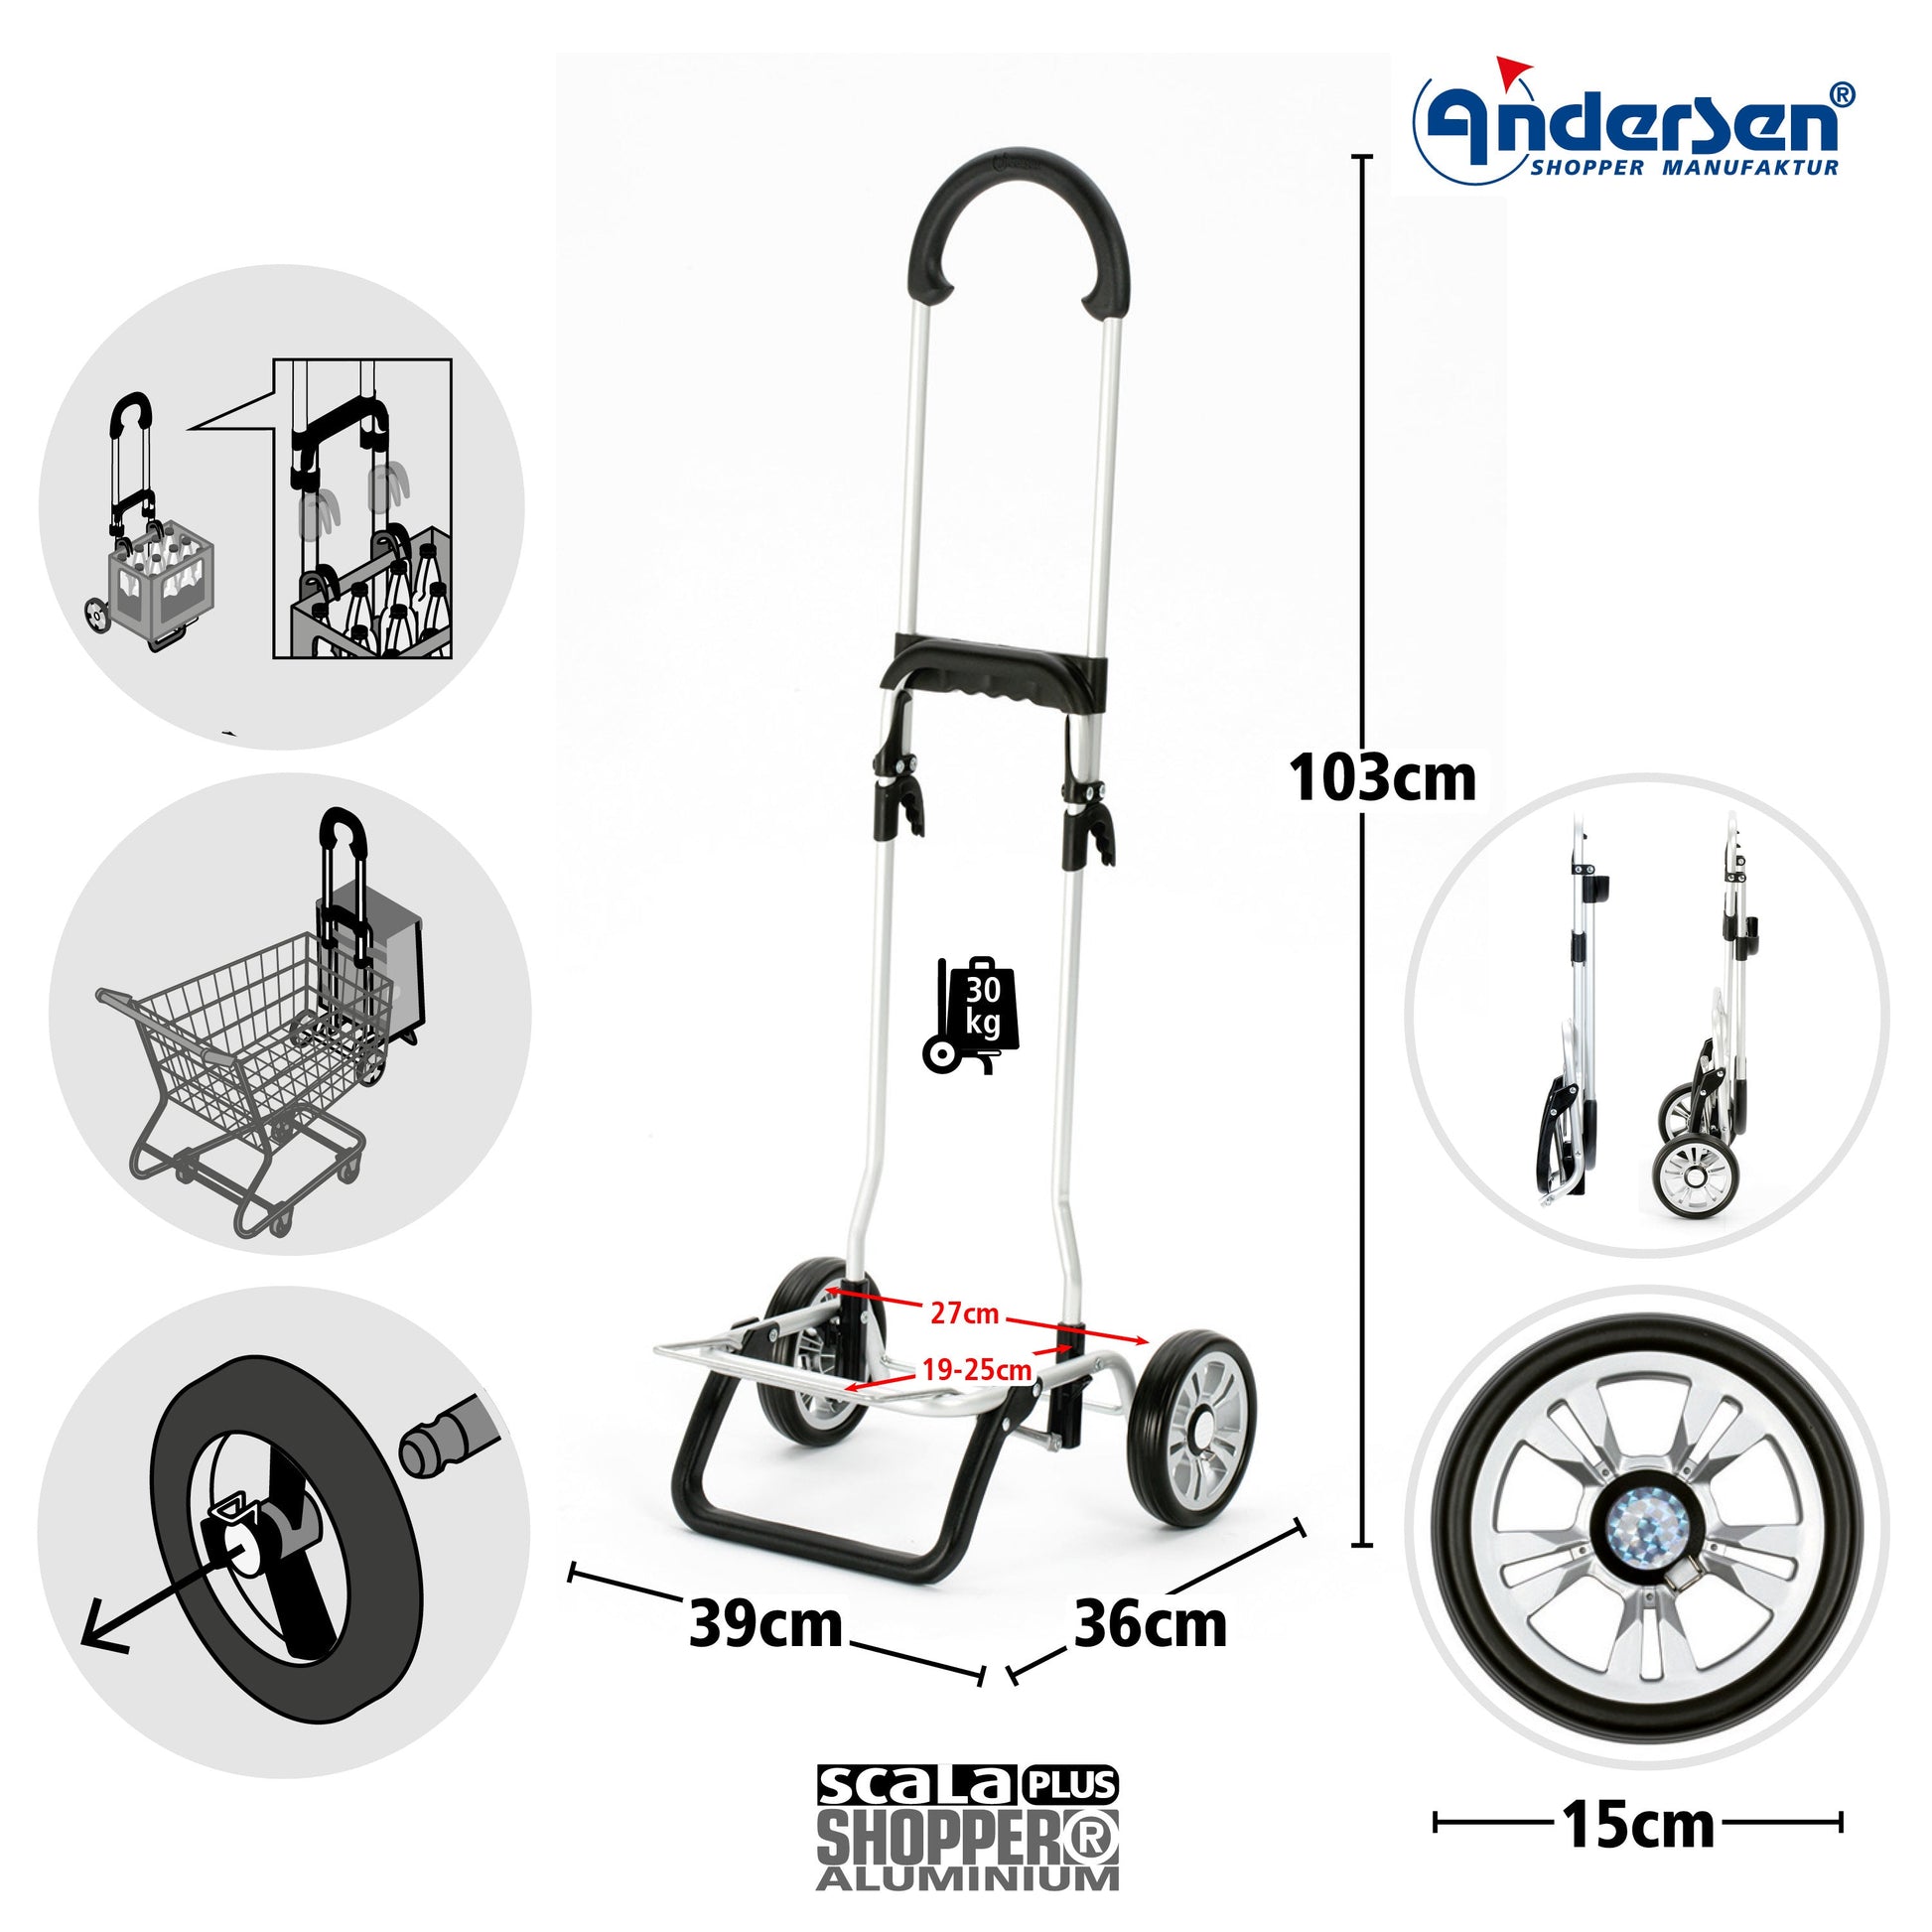 Andersen Shopper Manufaktur-Scala Shopper Plus Elik braun-www.shopping-trolley.ch-bild2